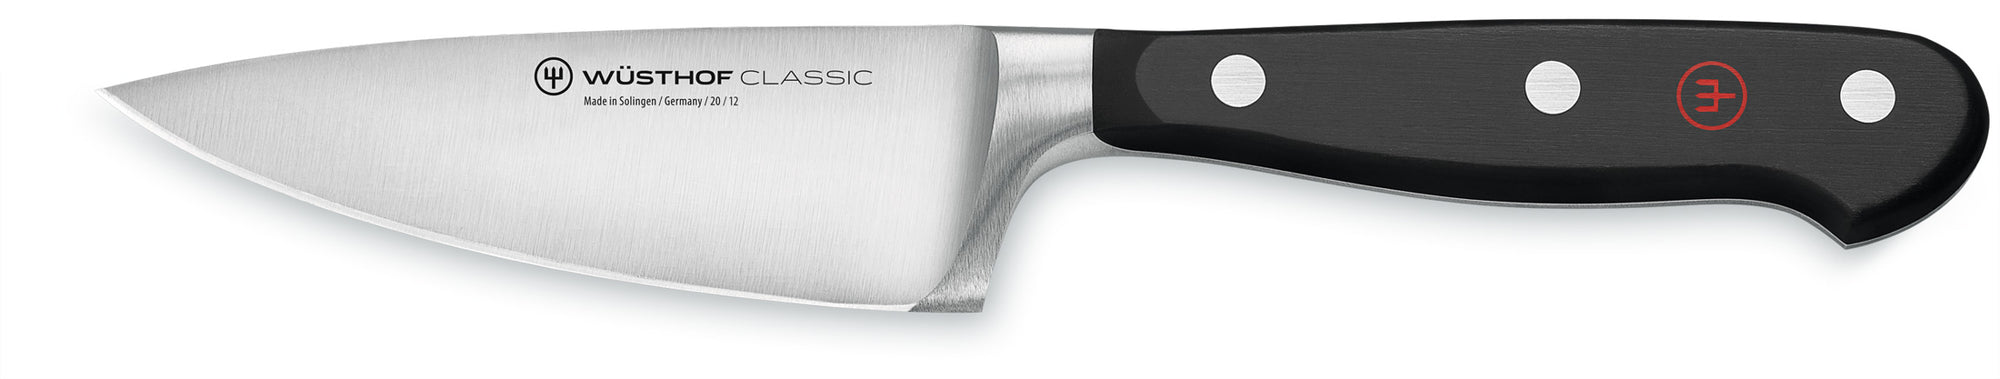 Wusthof Canada Classic Cook's Knife, 4.5-inch (12 cm) - 4582-12